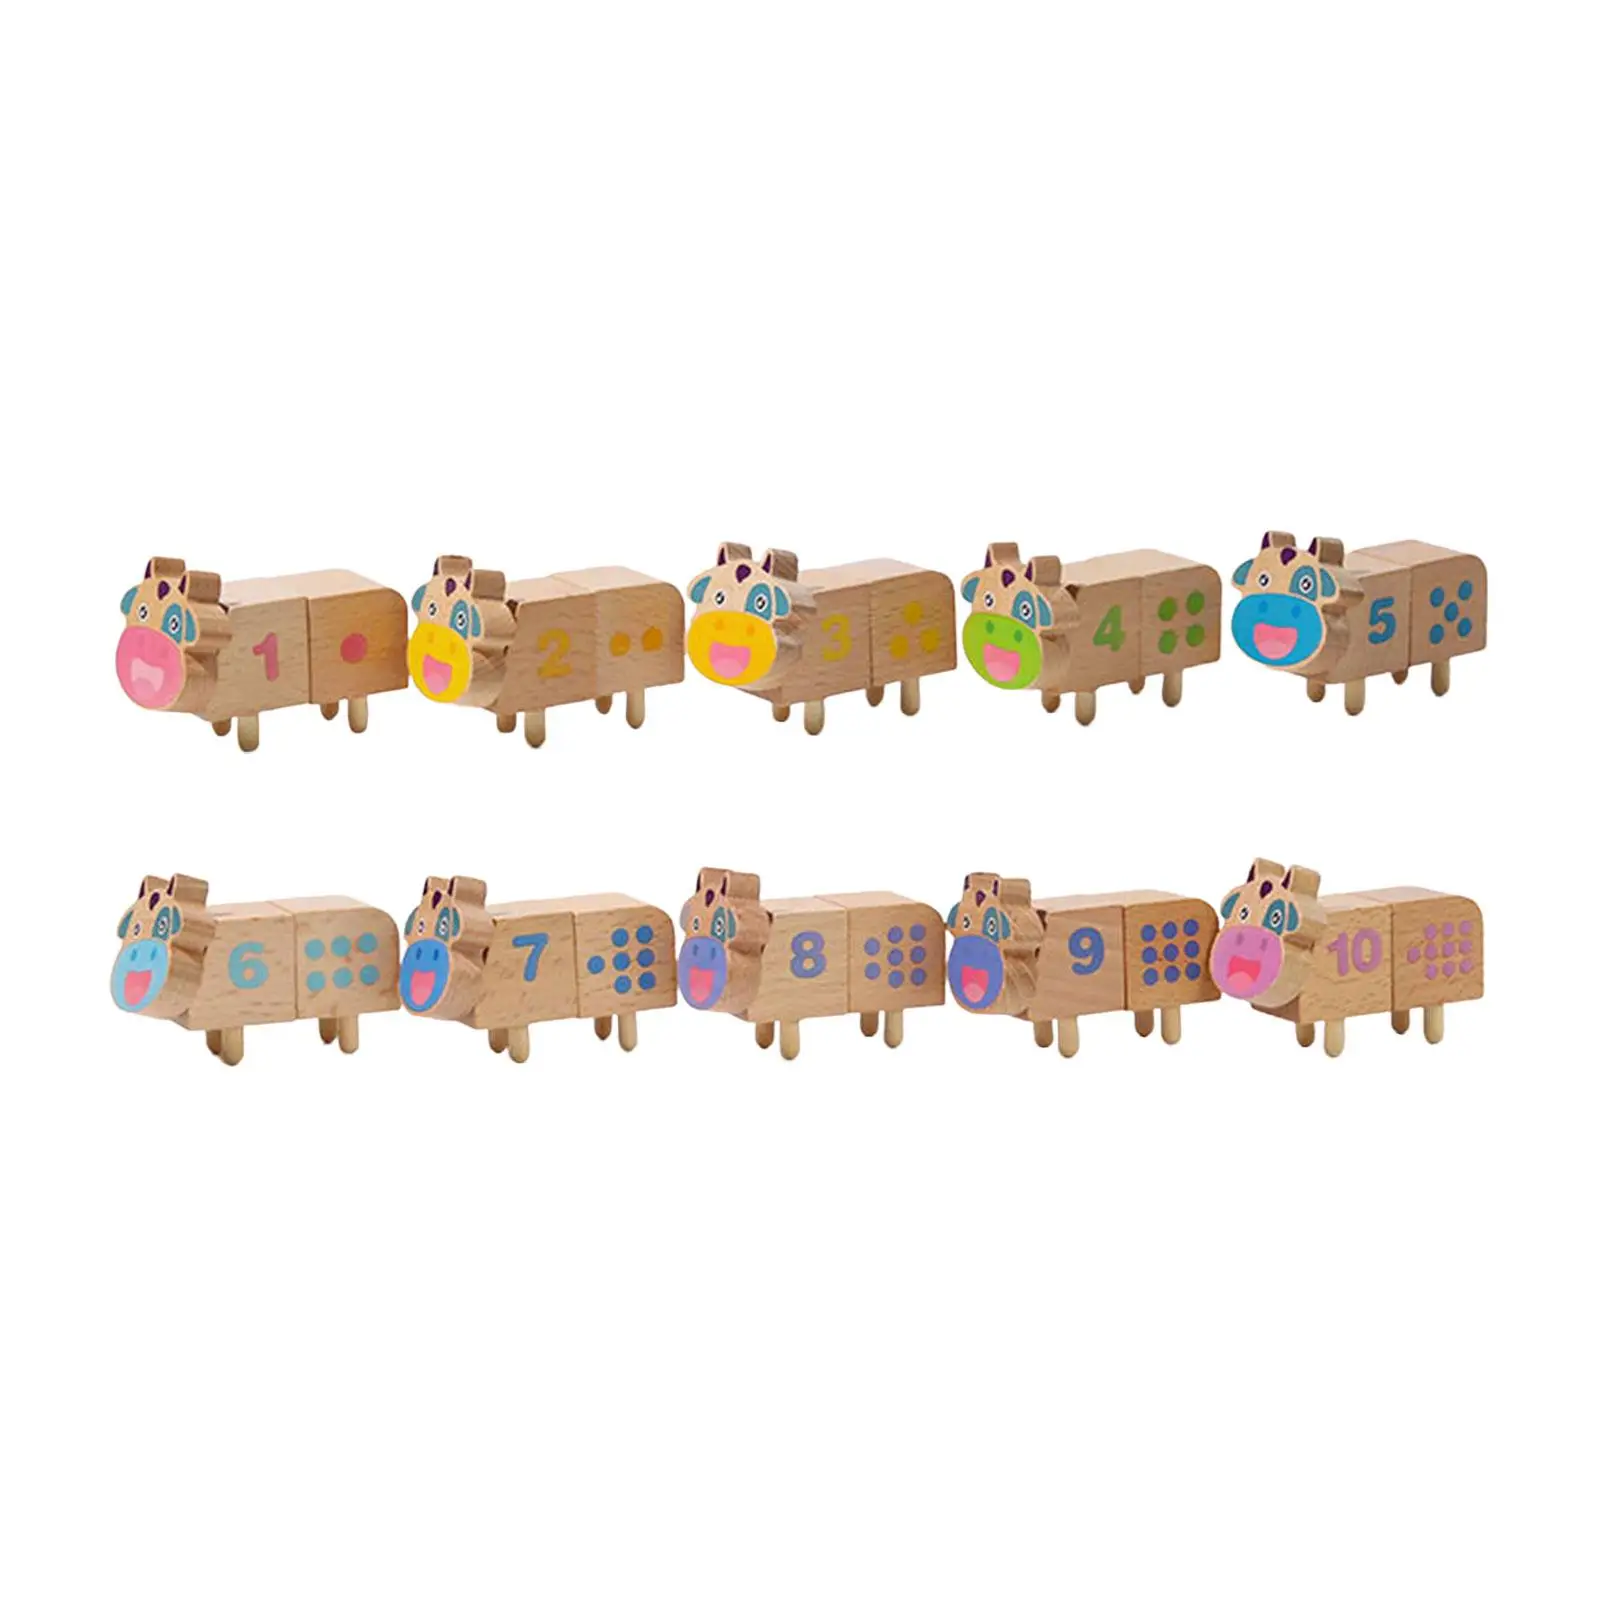 10x Wooden Building Blocks Fine Motor Skill Preschool Learning Montessori Educational Toys for Girls Boys Kids Holiday Gifts